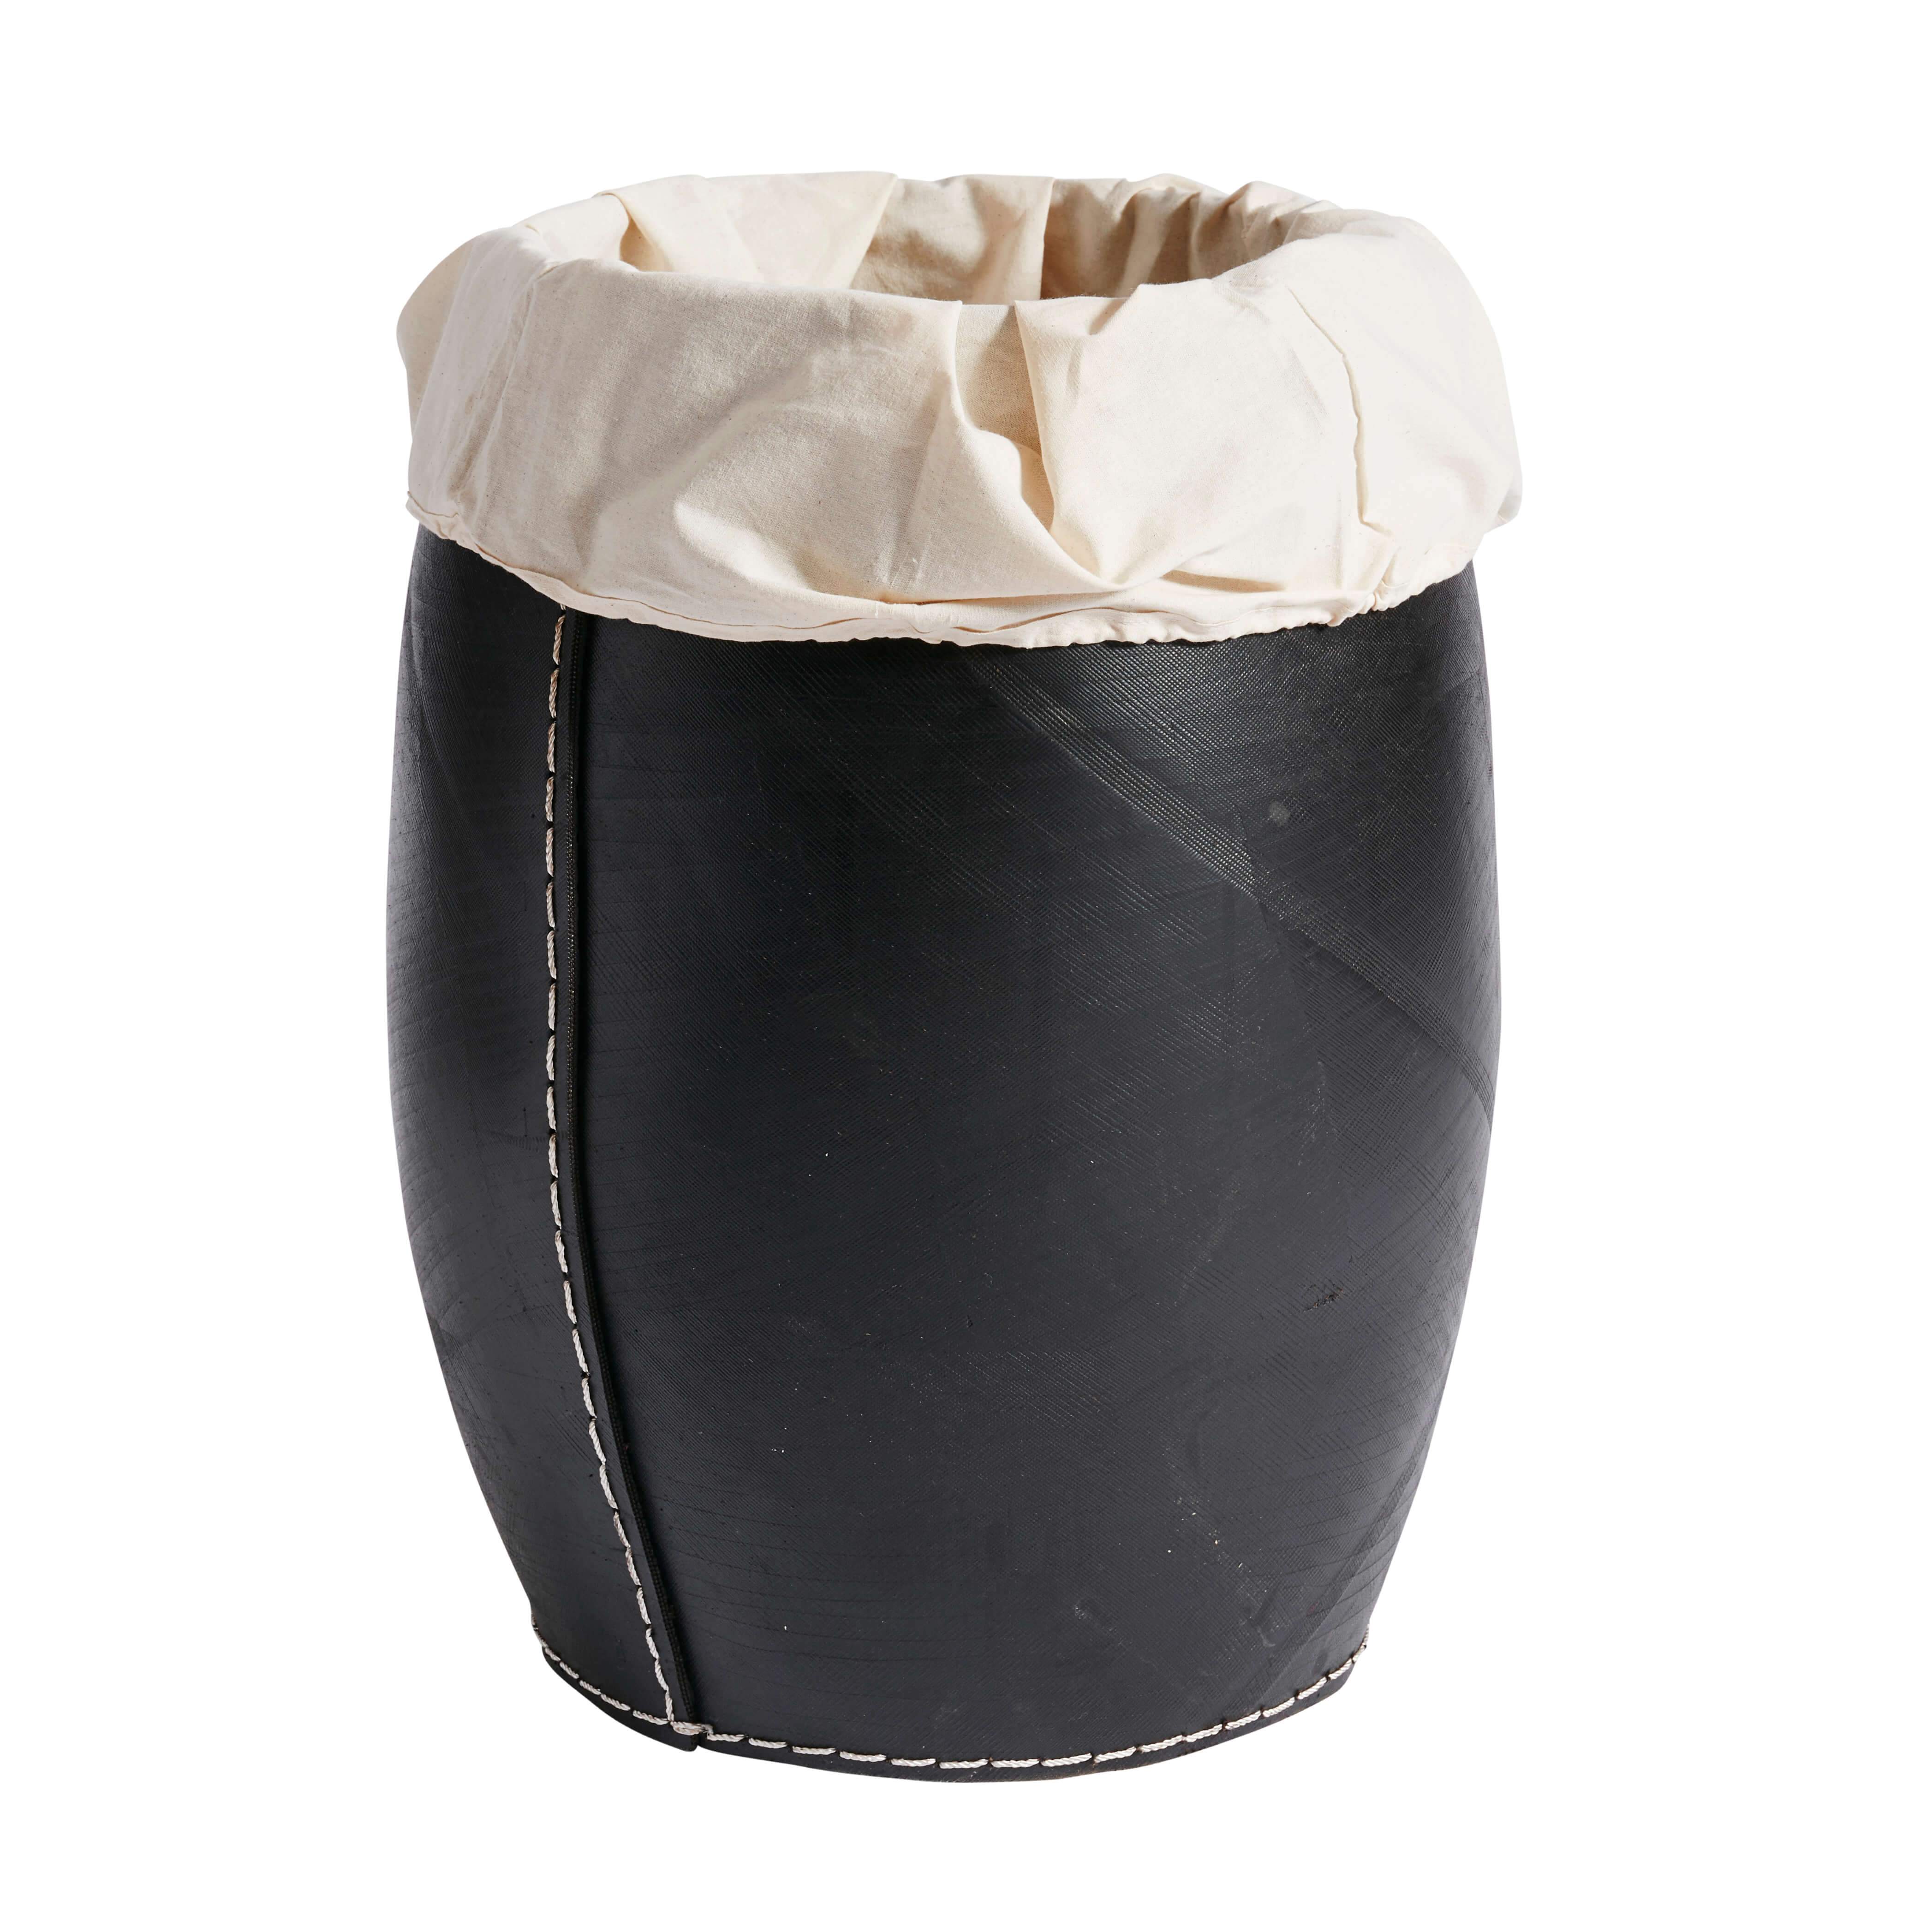 Muubs Dacarr Laundry Basket Black, 60 cm